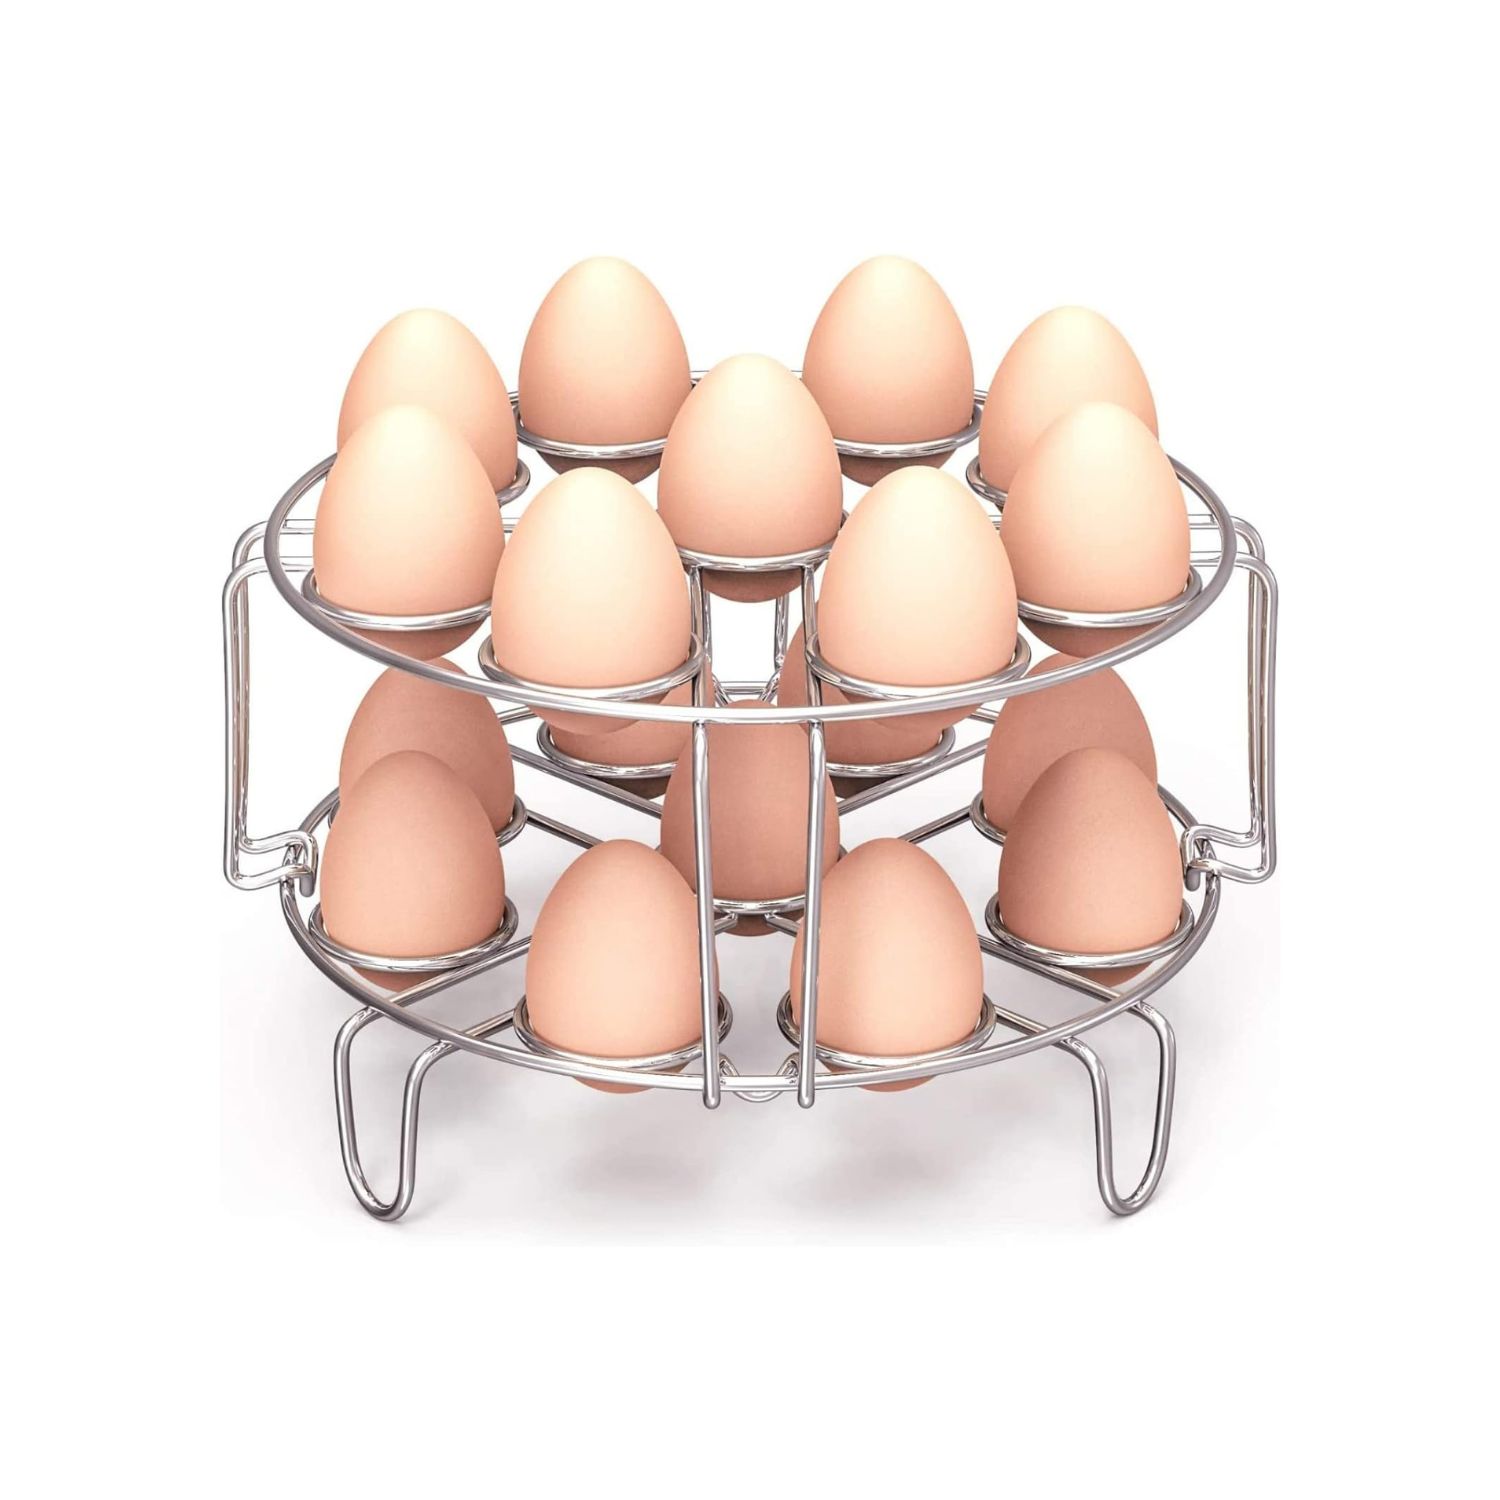 Stackable Egg Rack